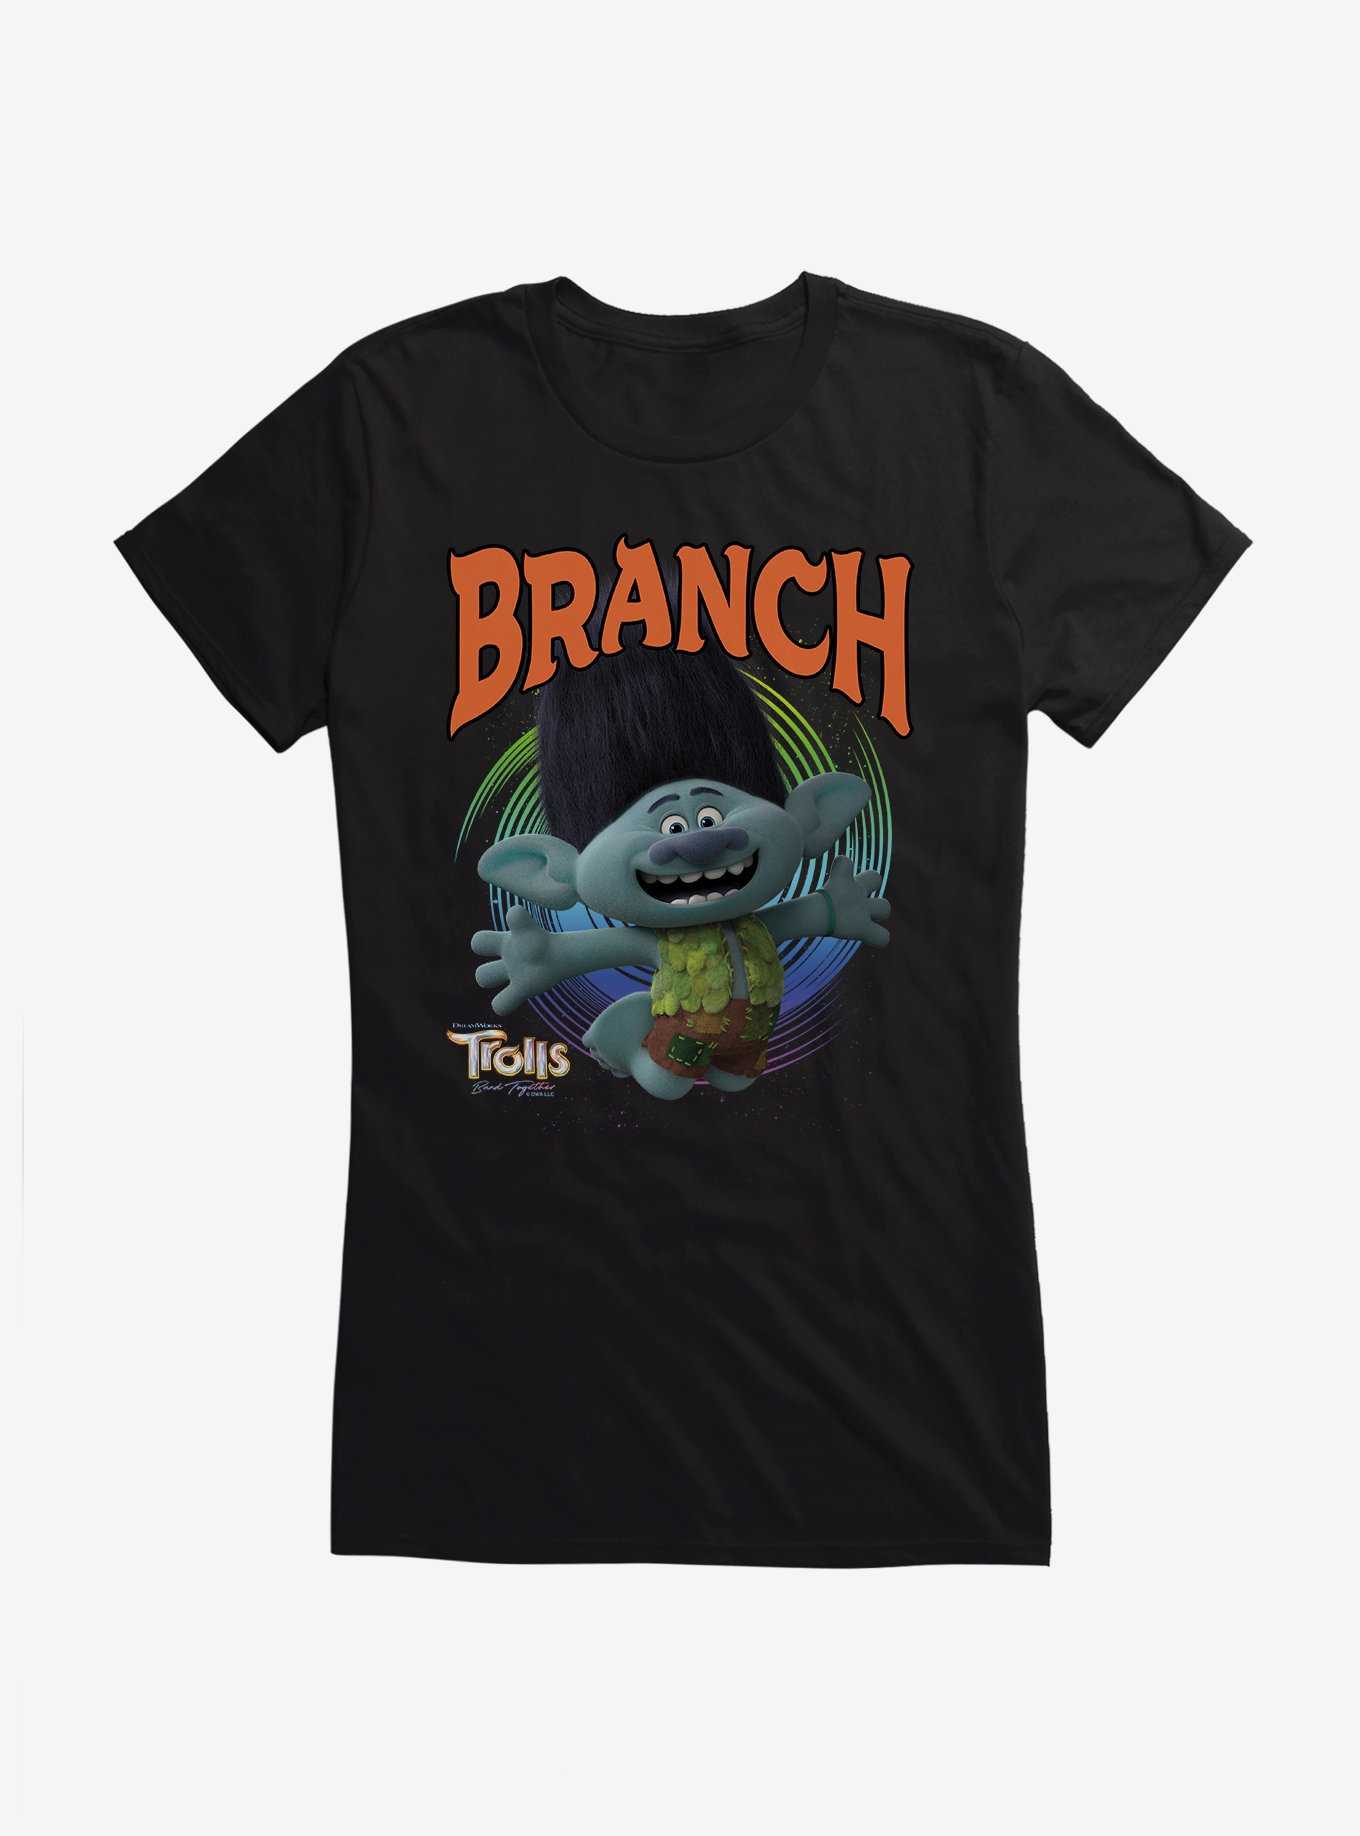 Trolls 3 Band Together Branch Girls T-Shirt, , hi-res